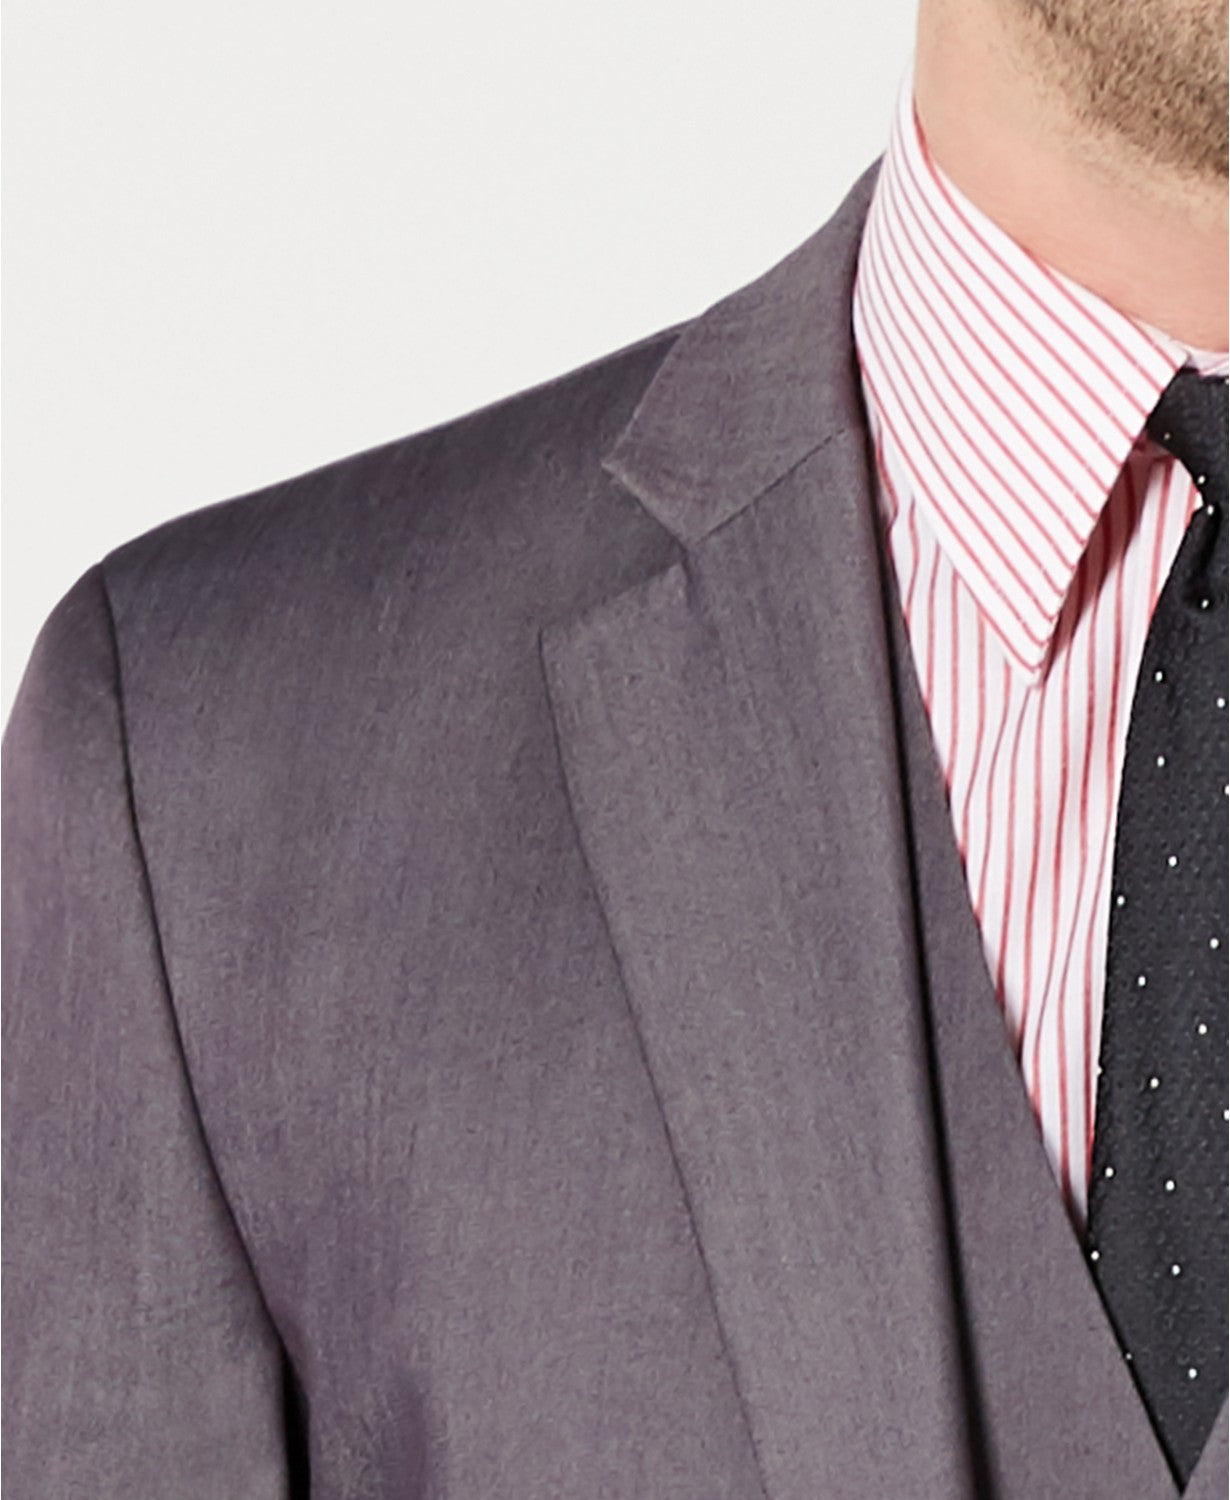 Perry Ellis Men's Portfolio Slim-Fit Stretch Gray Solid Suit Jacket 48R